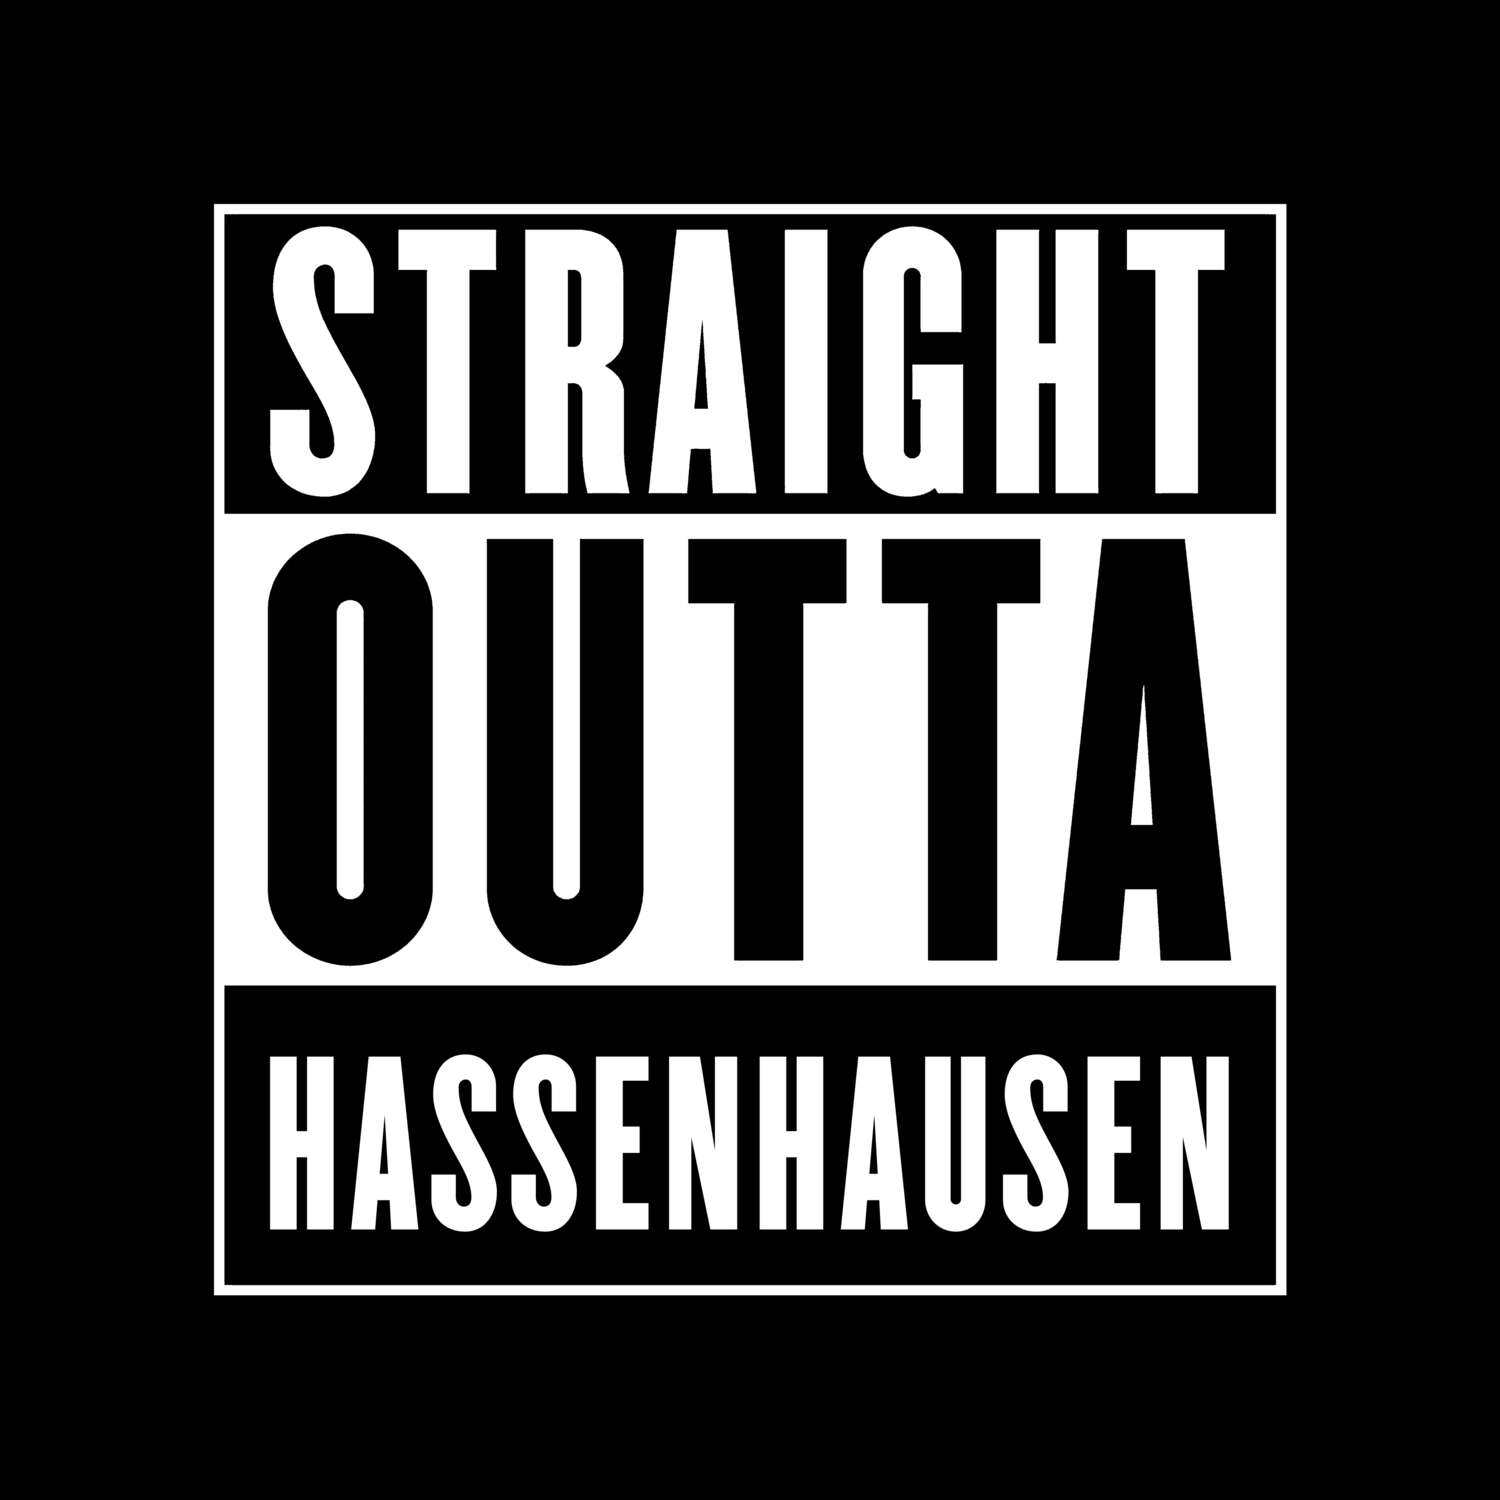 Hassenhausen T-Shirt »Straight Outta«